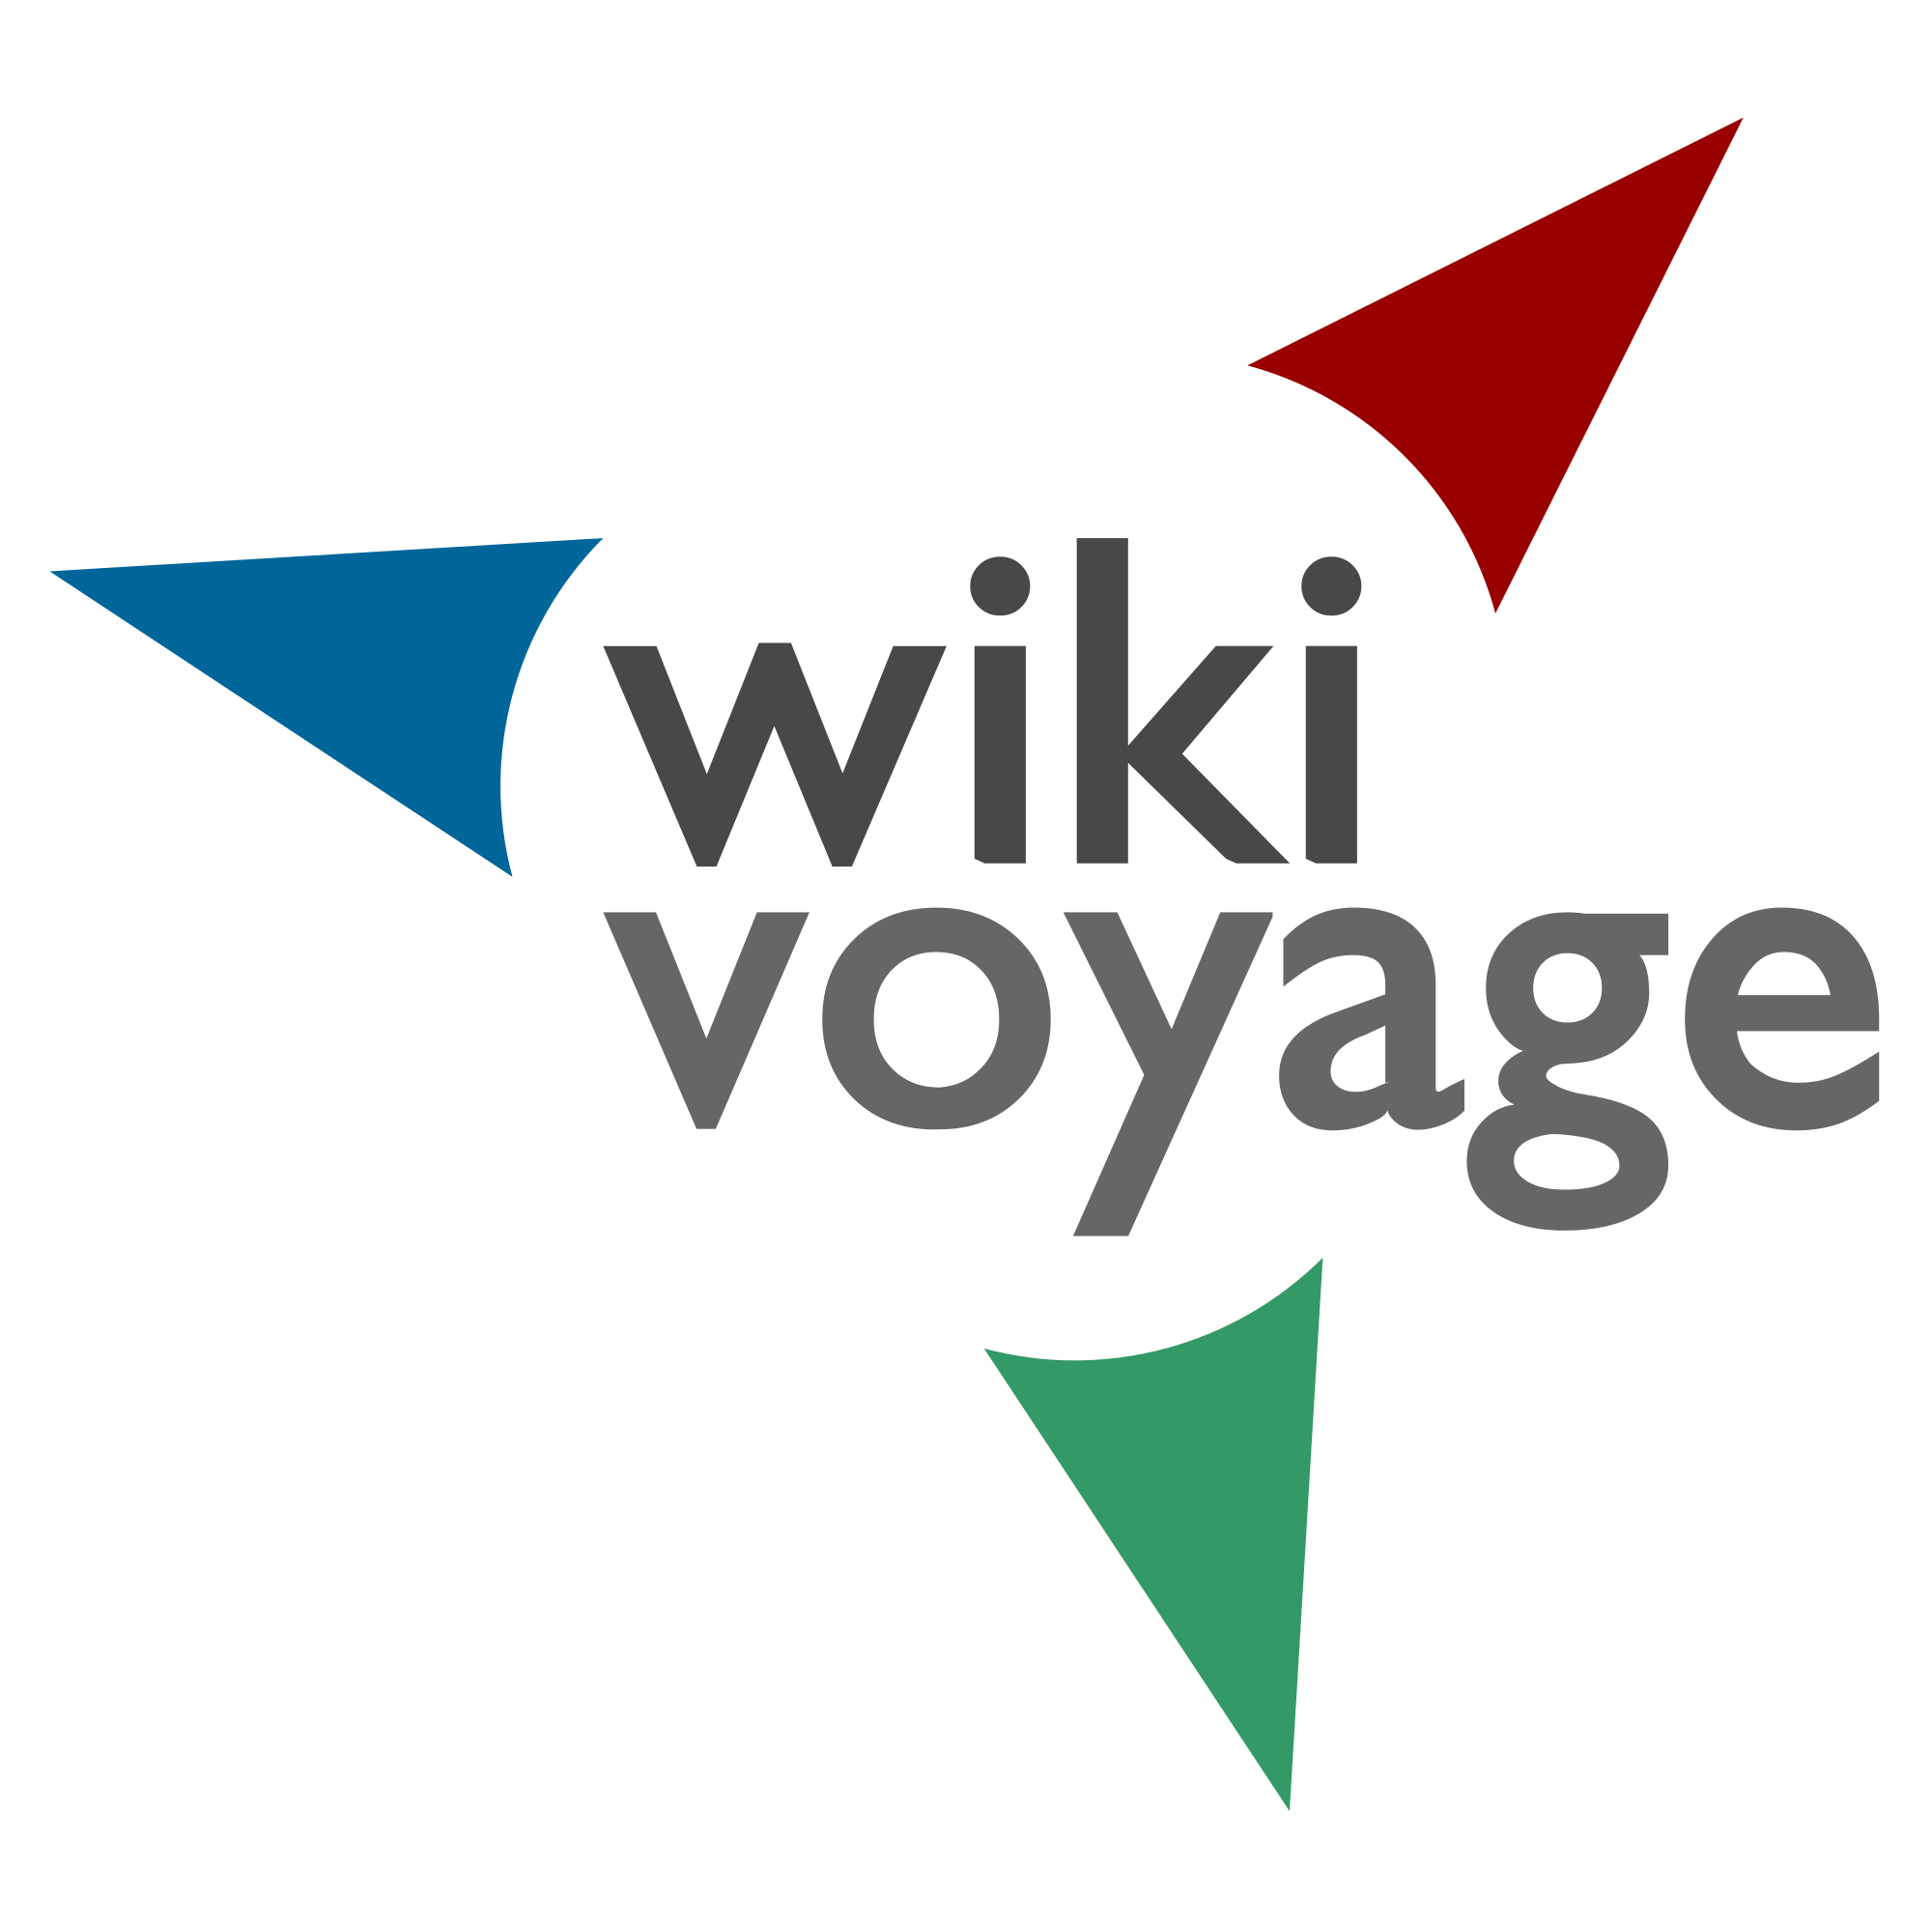 travel wikivoyage